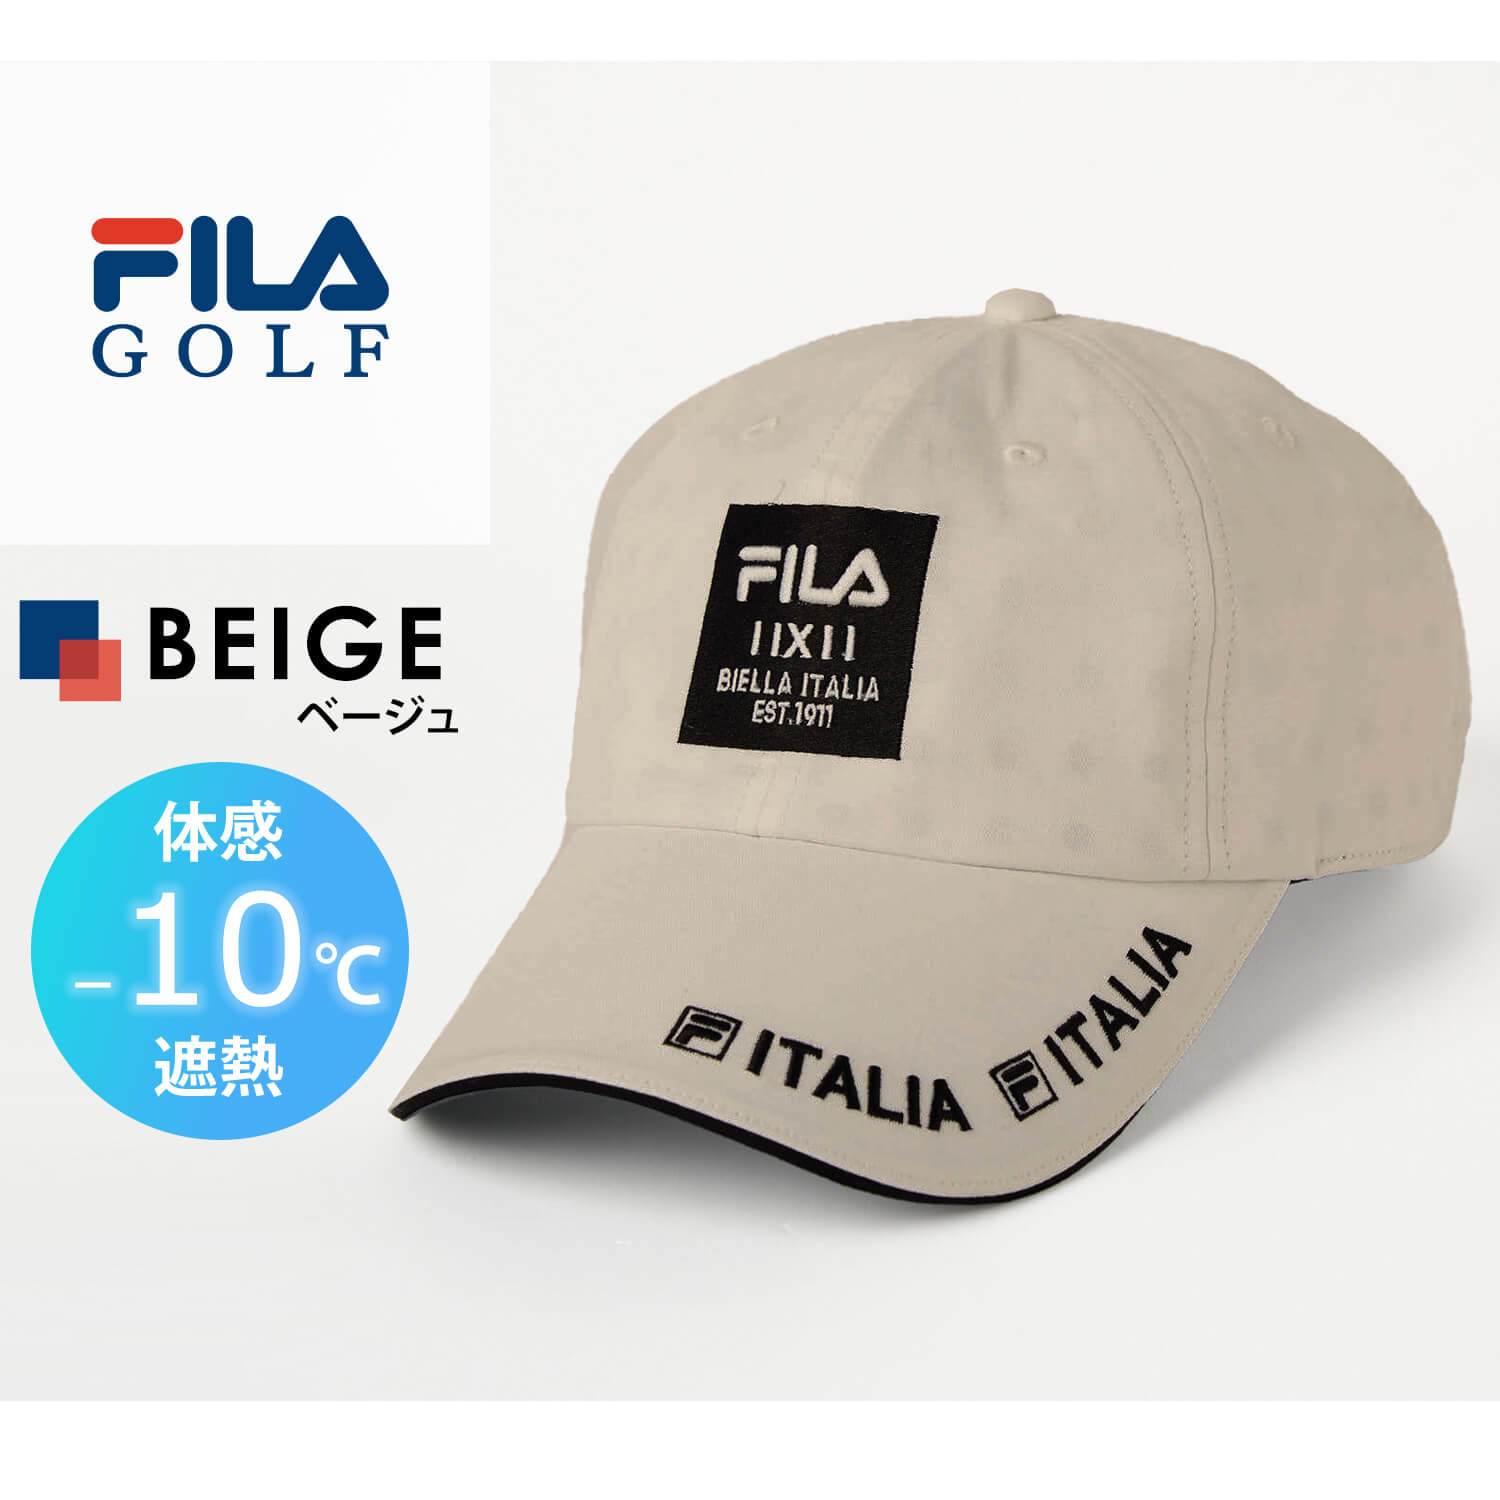 FILA GOLF フィラゴルフ ゴルフウェア キャップ メンズ ブランド 春 夏 深め 大きめ 帽子 遮熱 UVカット 体感-10℃ コカゲル 帽子